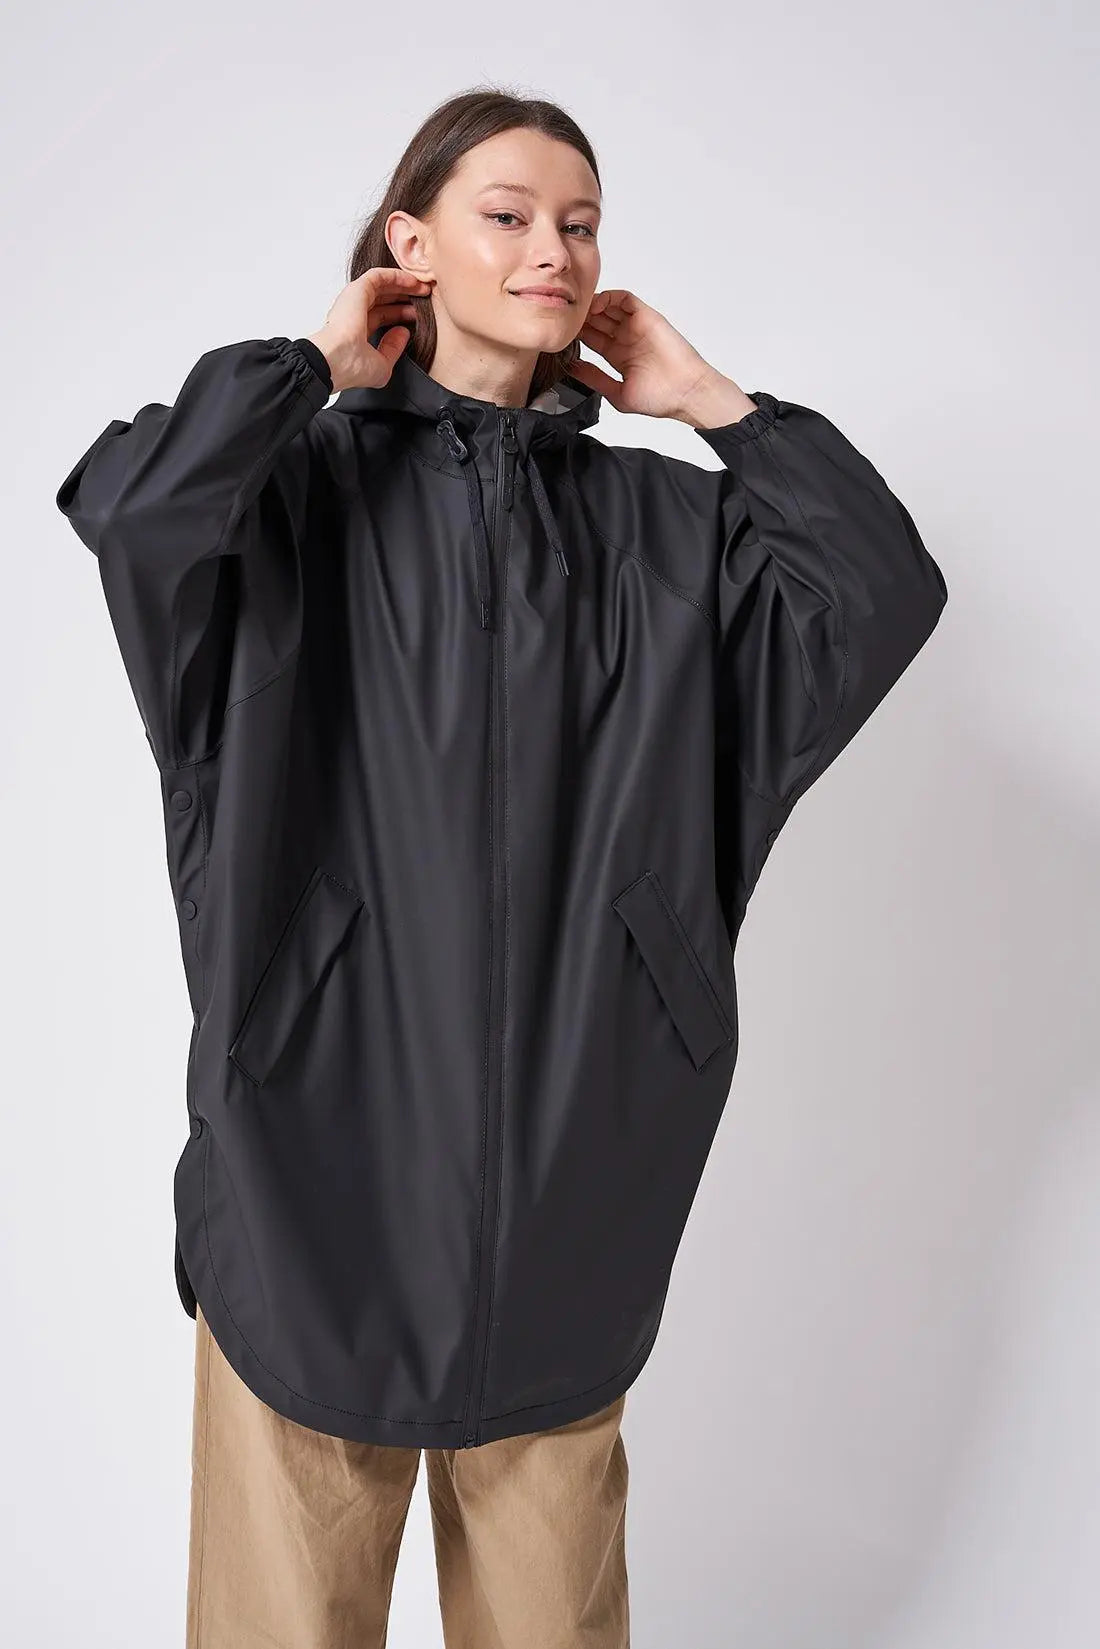 SKY. Chubasquero impermeable tipo capa de Mujer y Hombre. – Tantä Rainwear